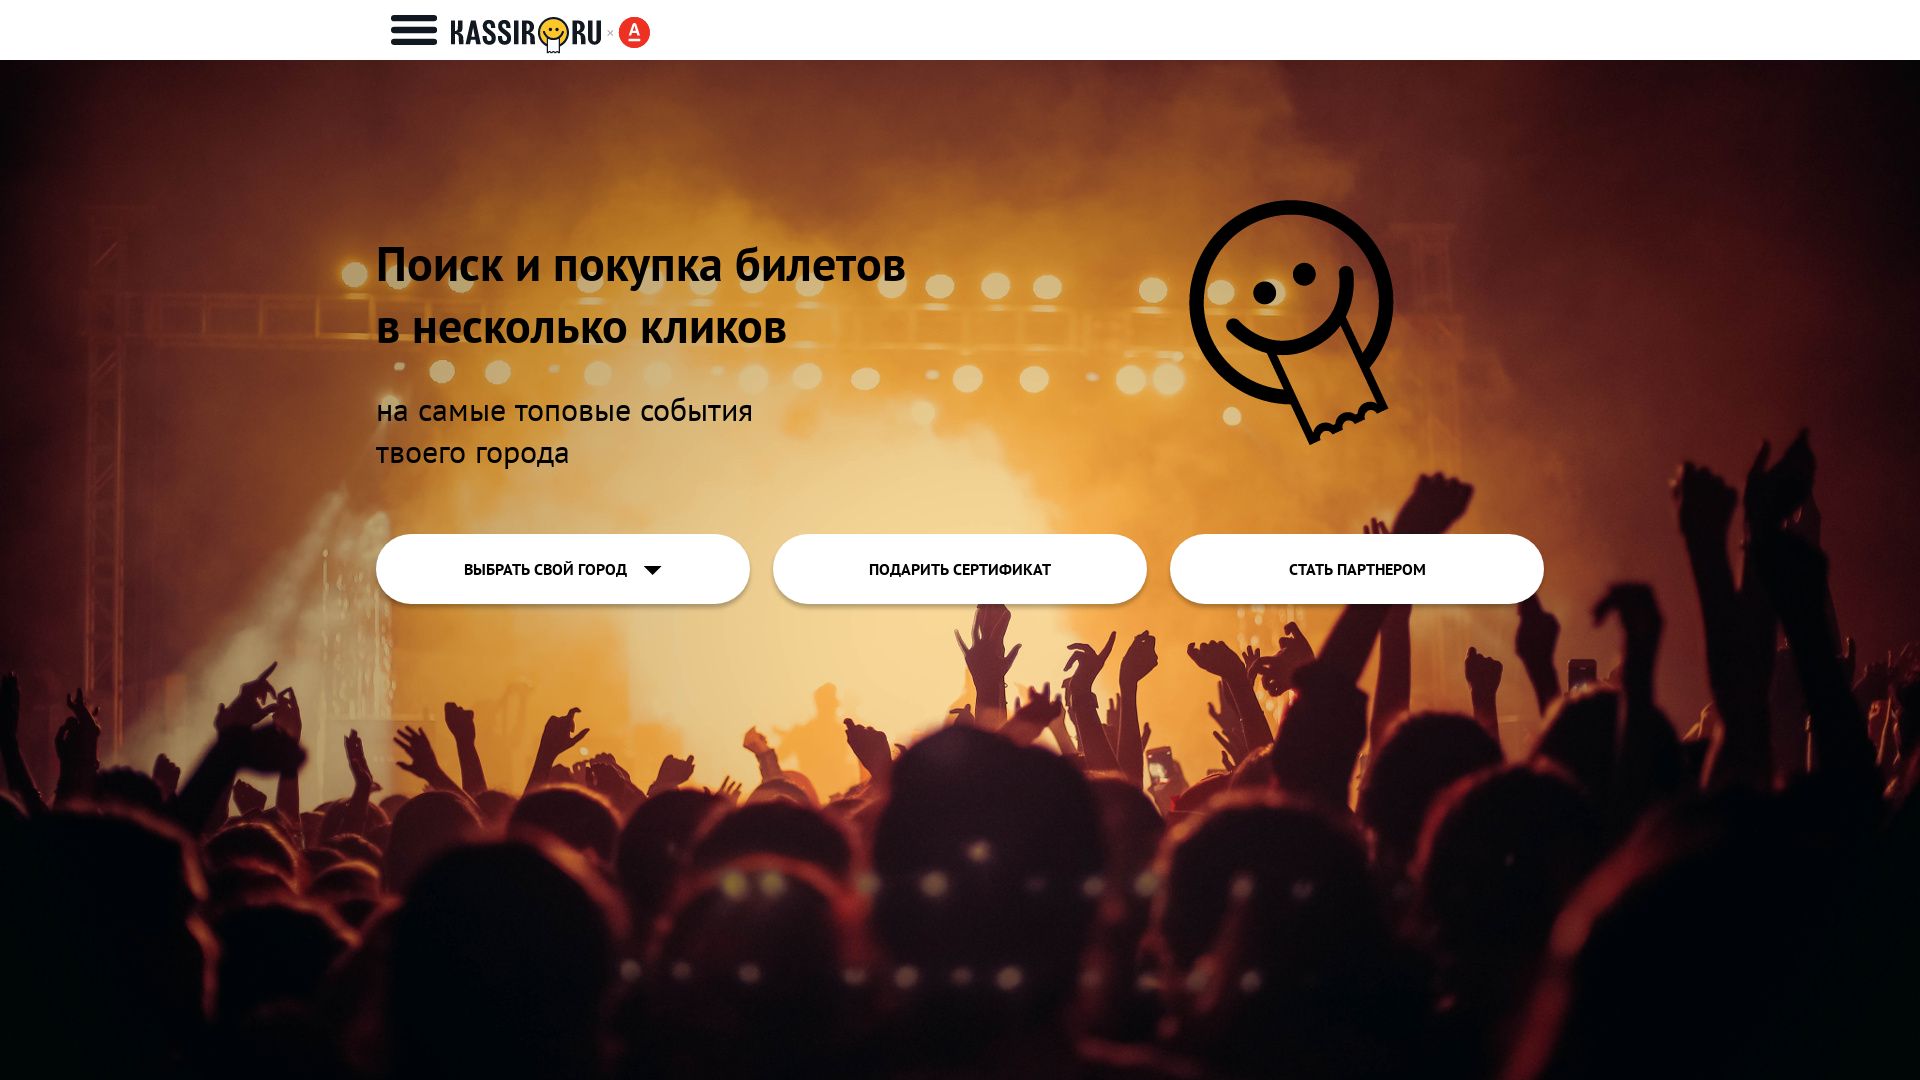 Webseitenstatus kassir.ru ist   ONLINE